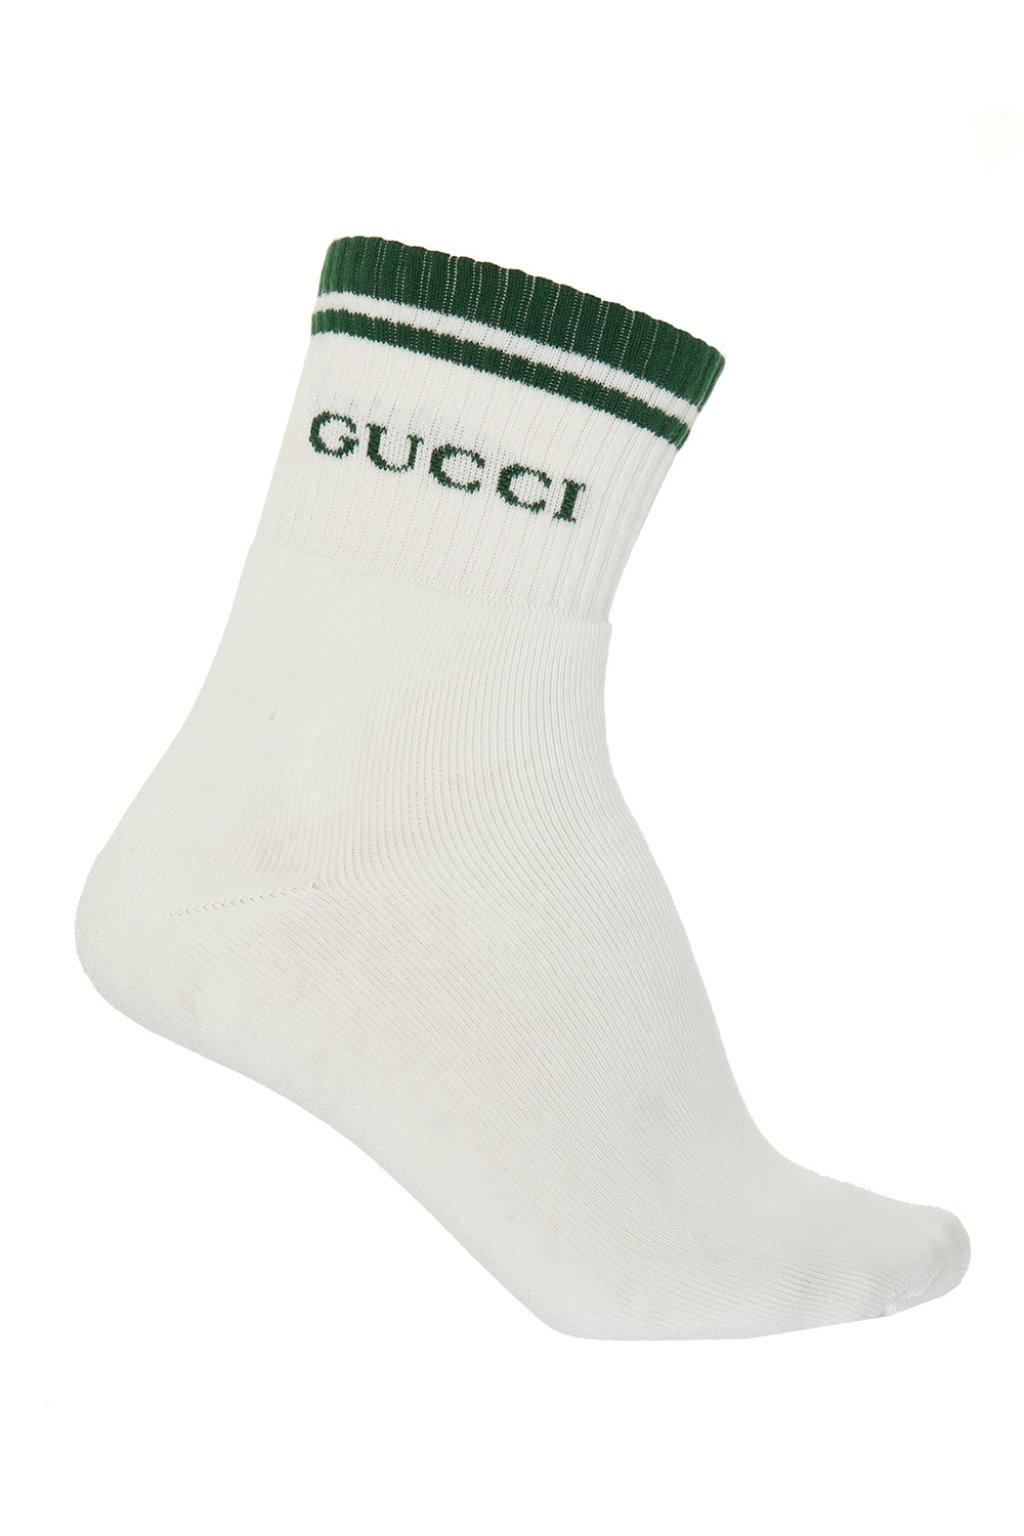 Gucci Cotton Branded Socks in White for Men - Lyst